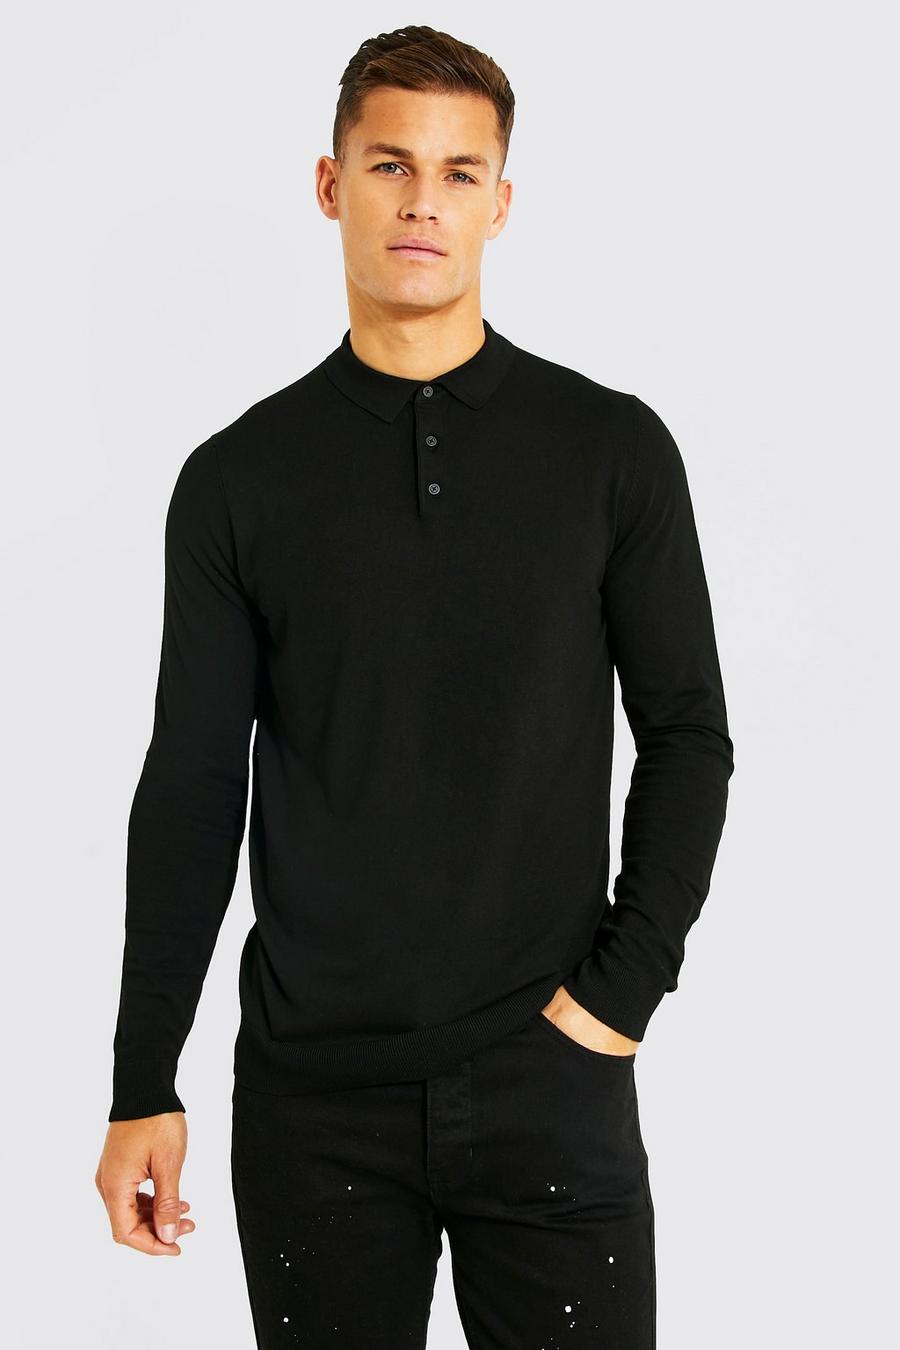 Black חולצת פולו סרוגה מבד ממוחזר עם שרוולים ארוכים, לגברים גבוהים